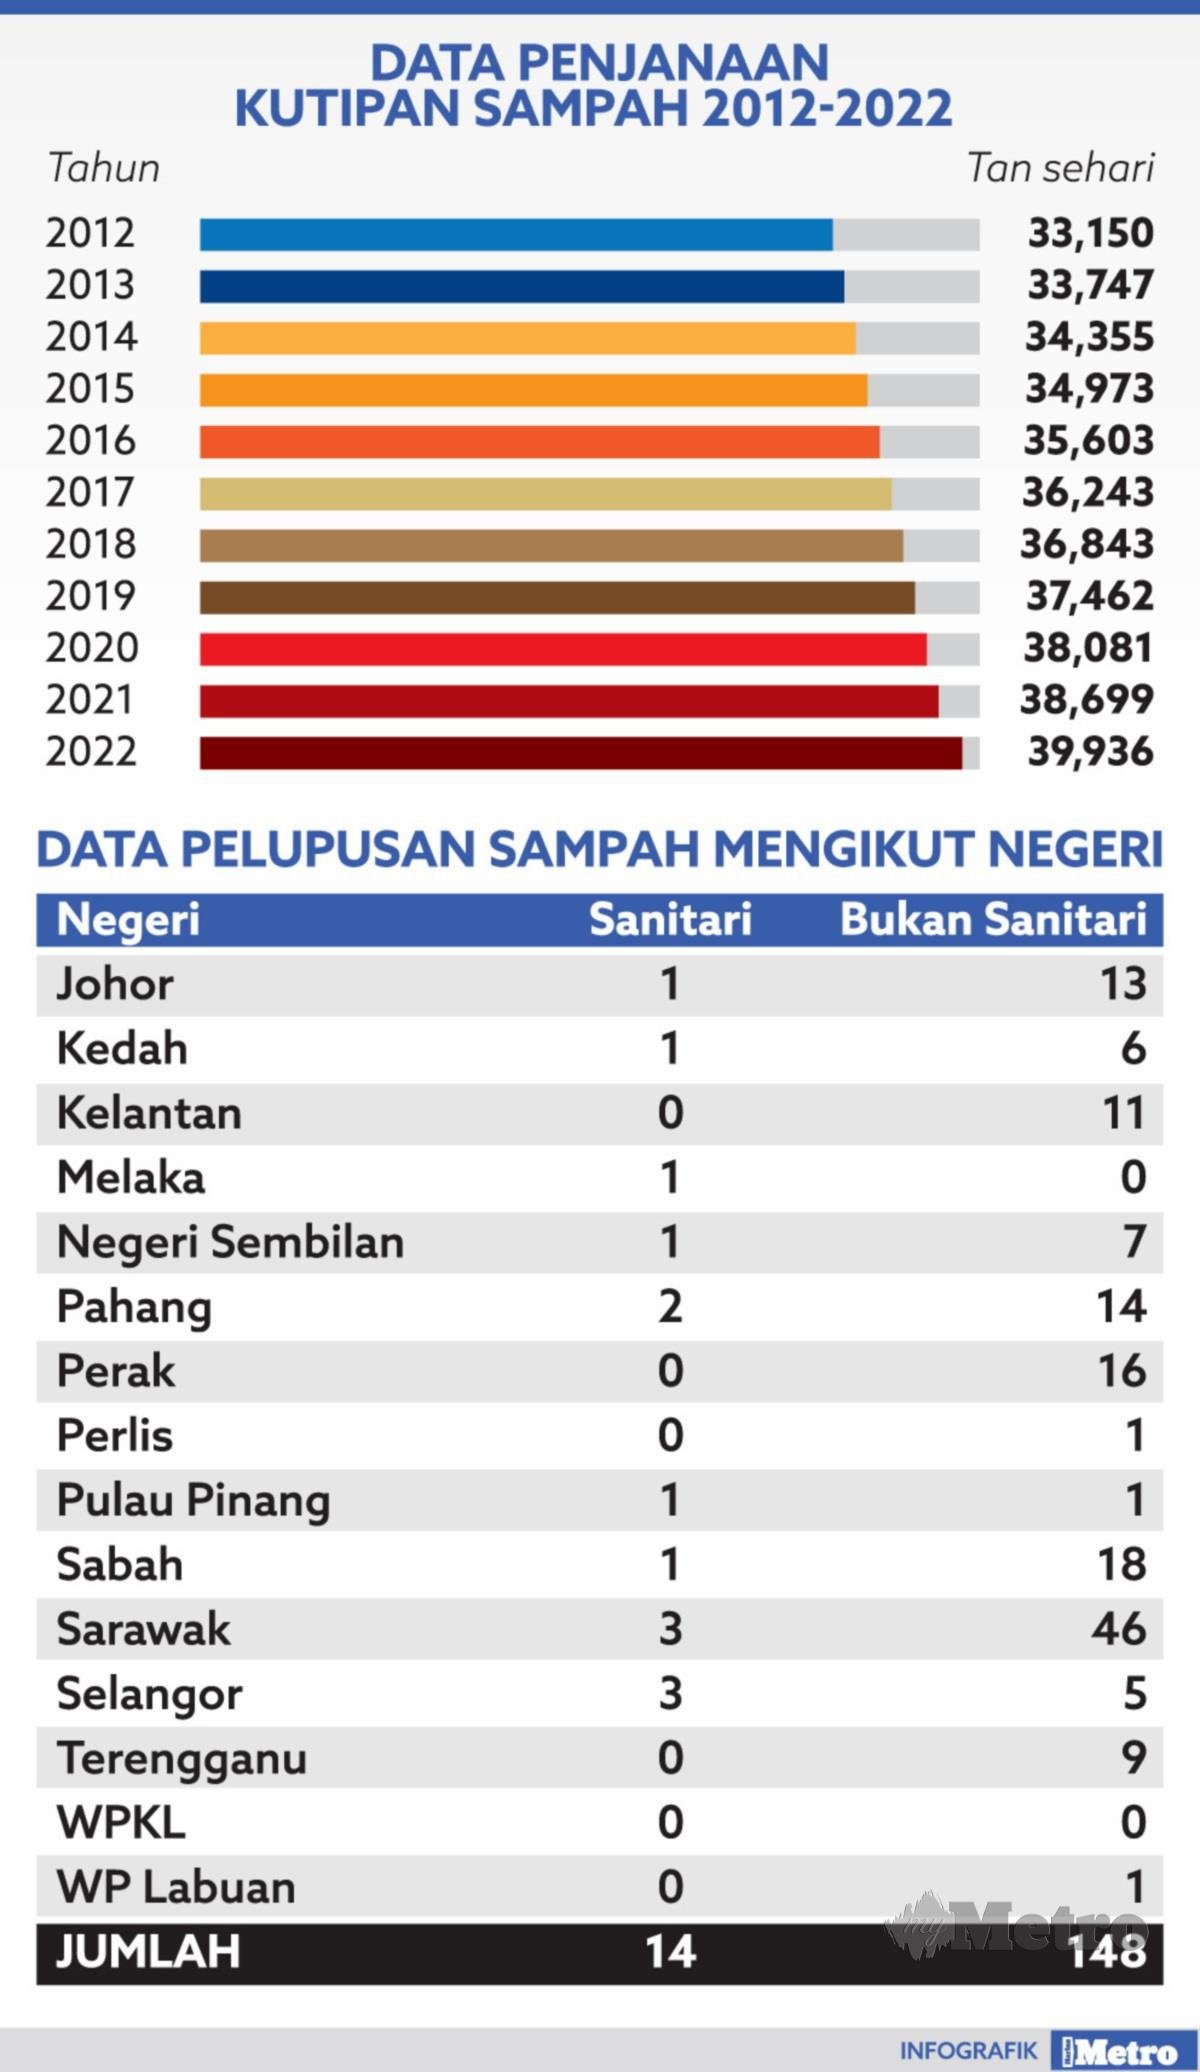 Jumlah penduduk pulau pinang 2021